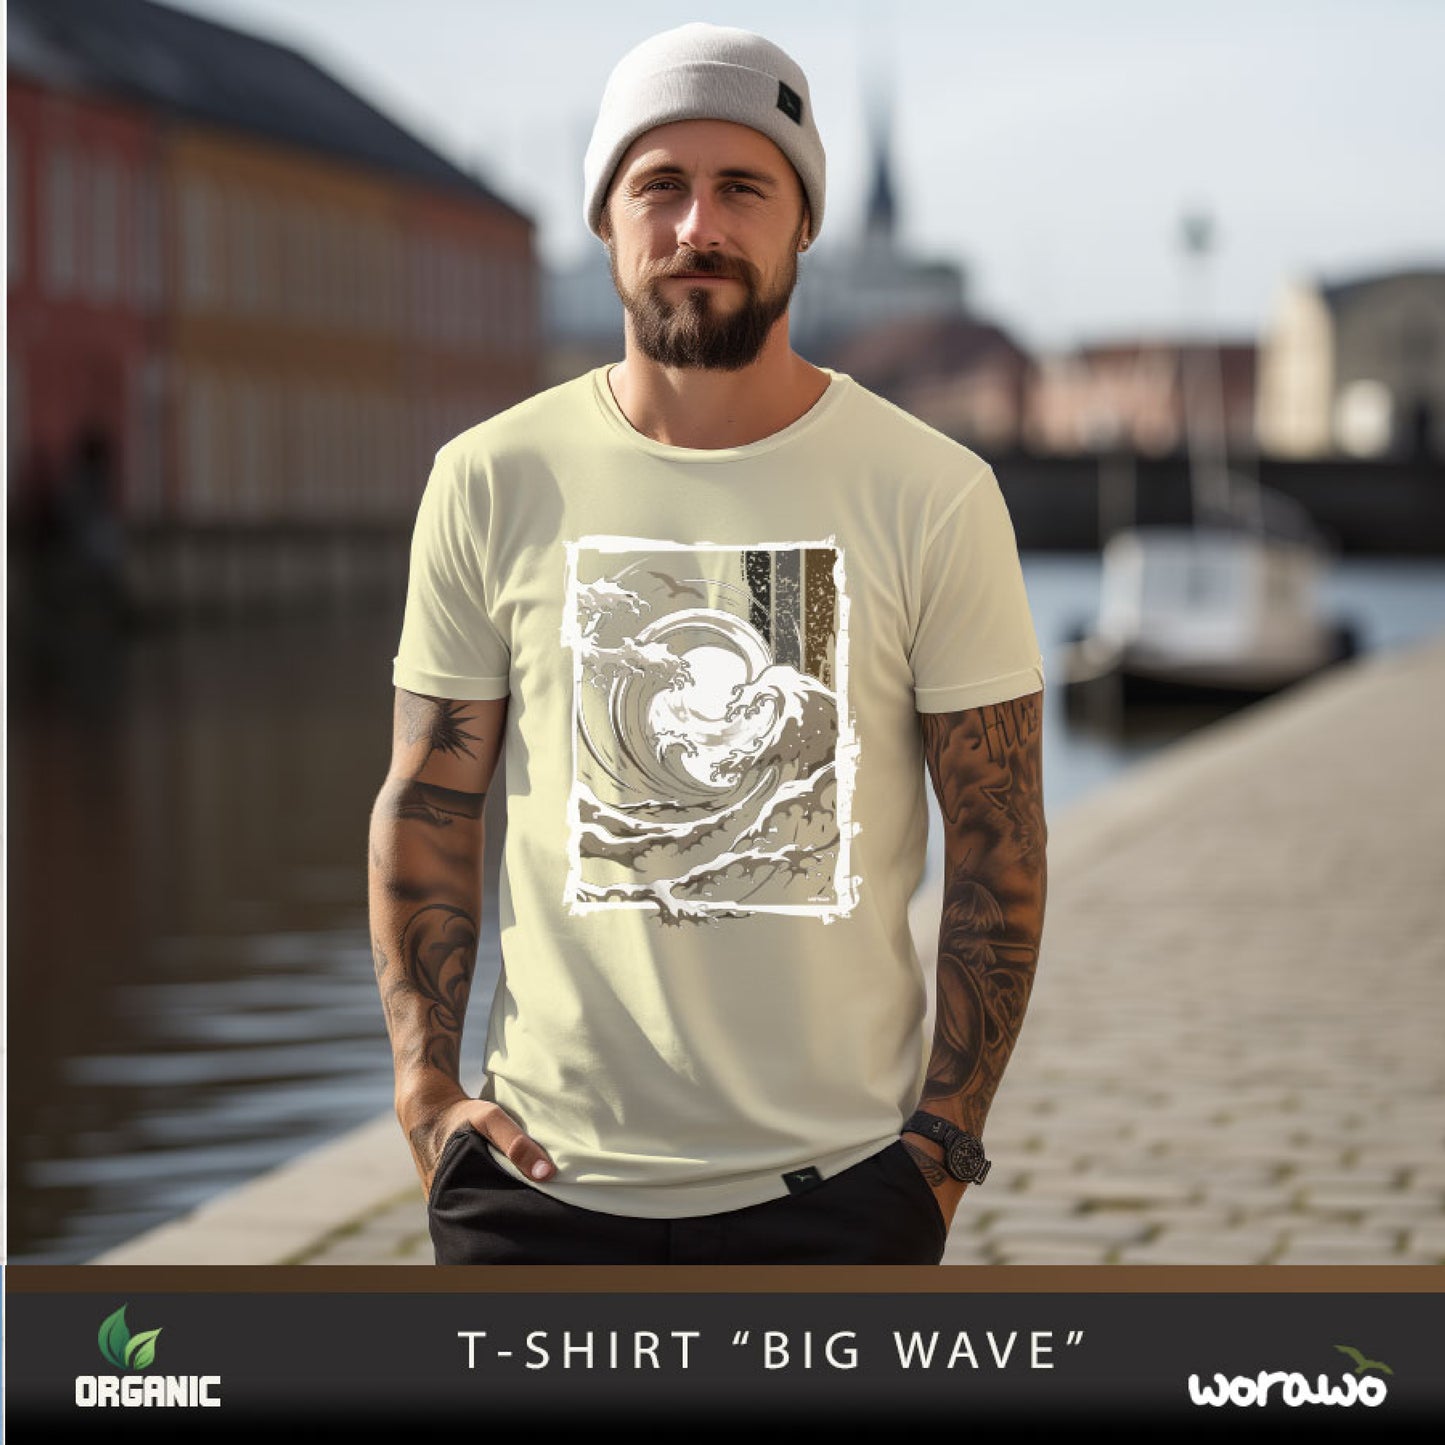 T-Shirt "Big Wave"